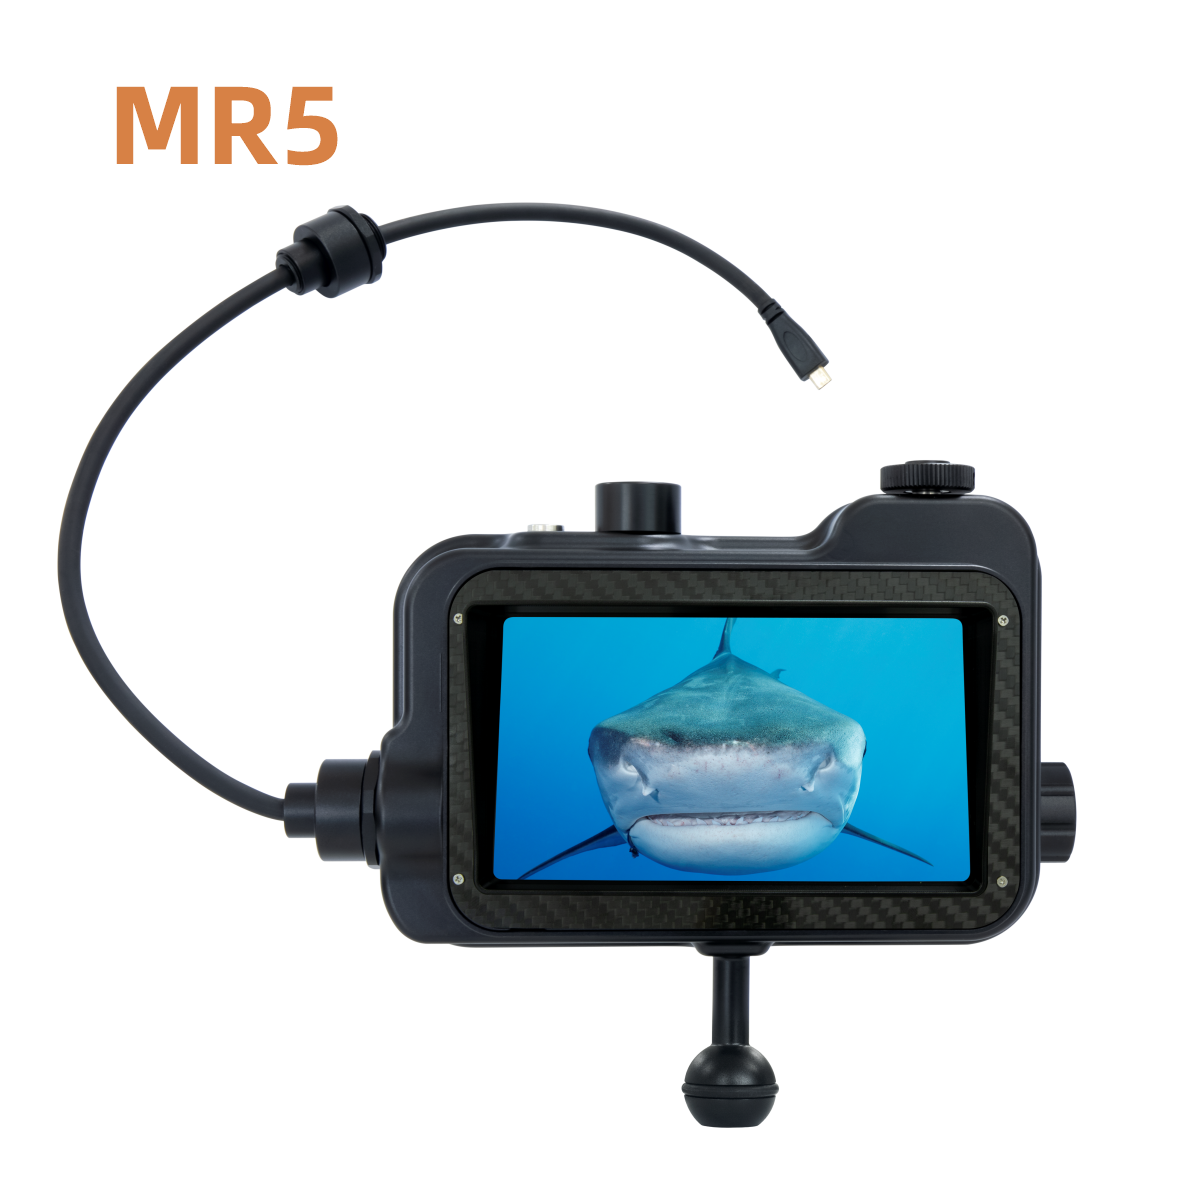 Monitor MR5